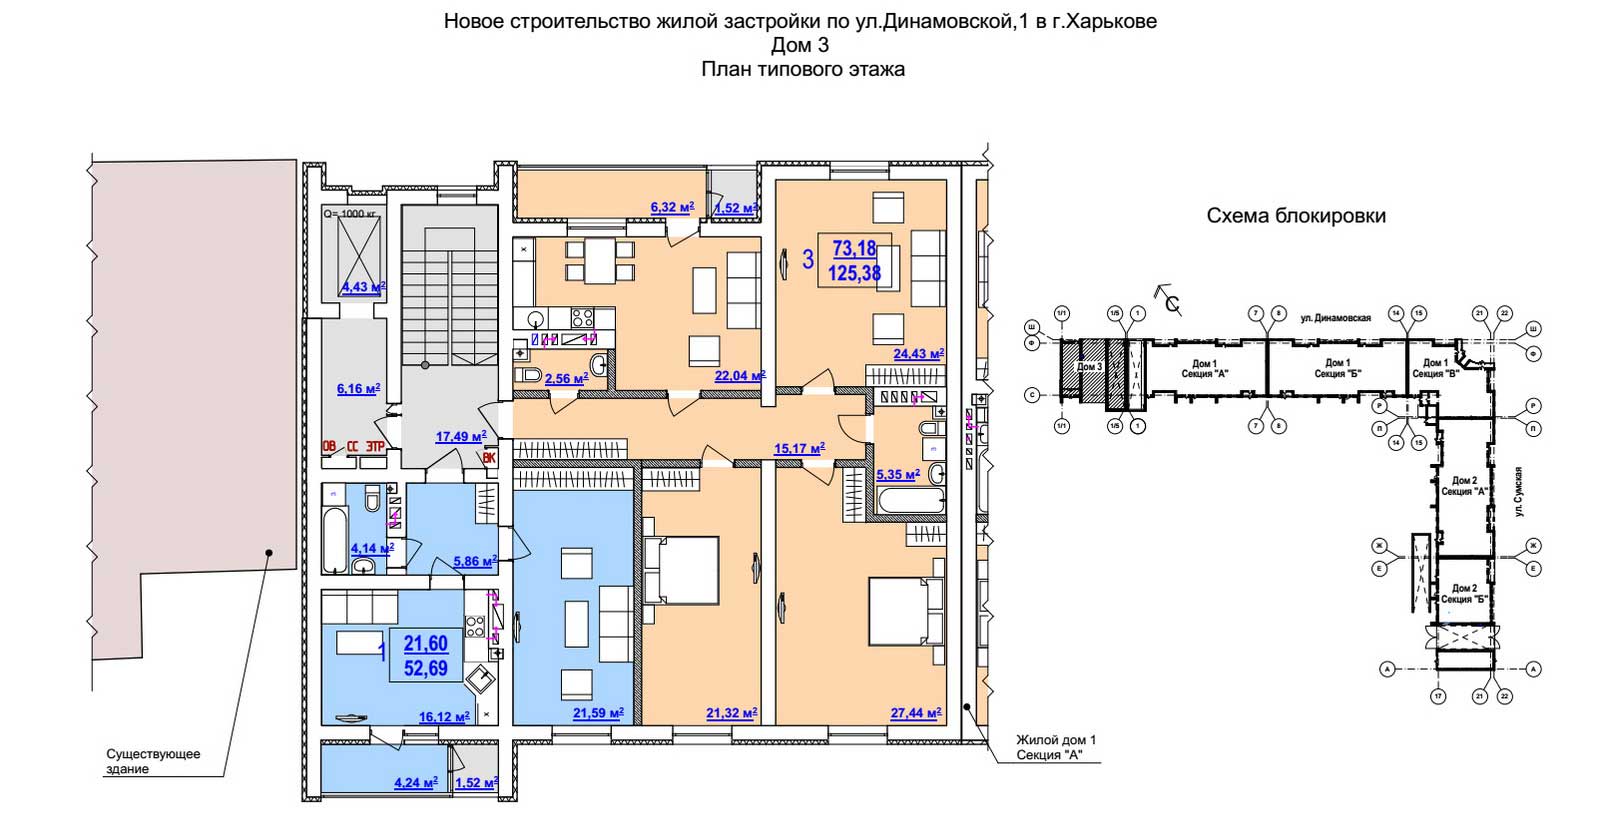 ЖК Дом на Сумской, дом 3, план типового этажа